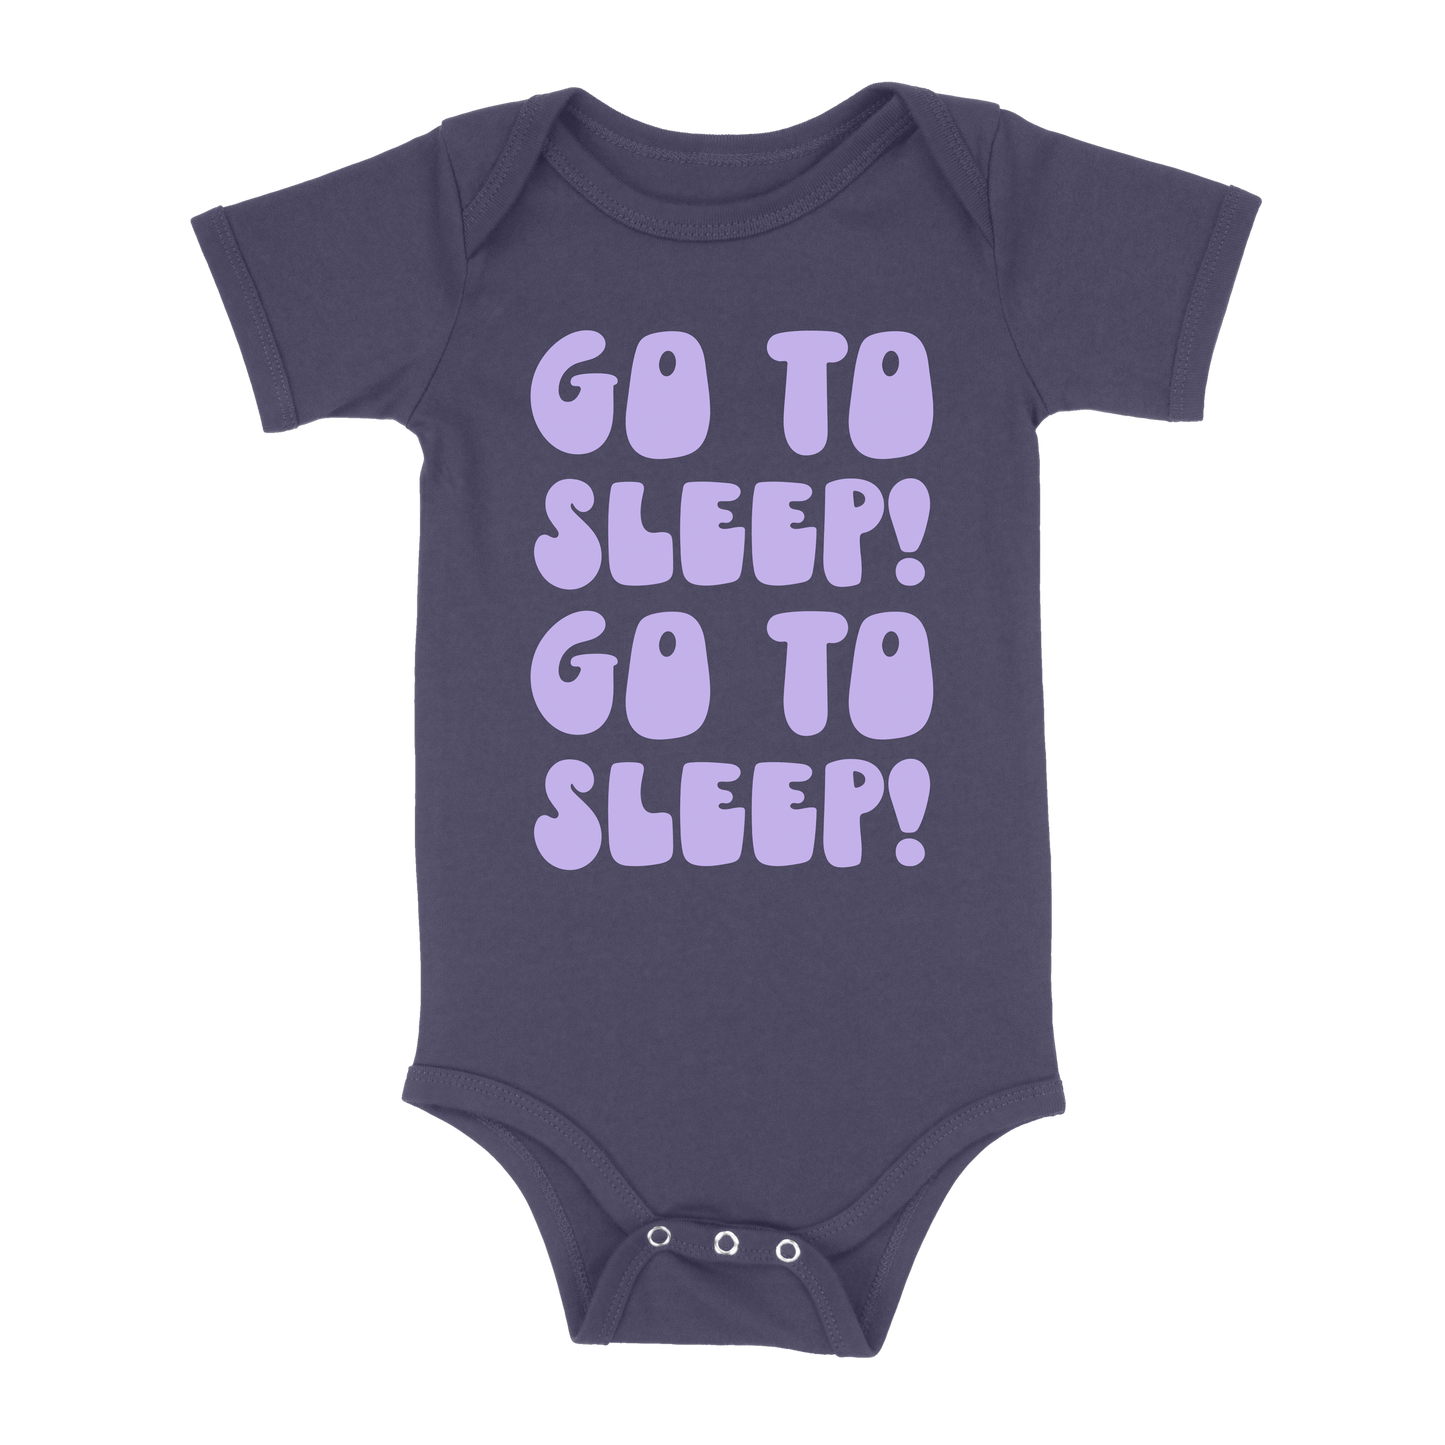 Go To Sleep! Baby - Navy